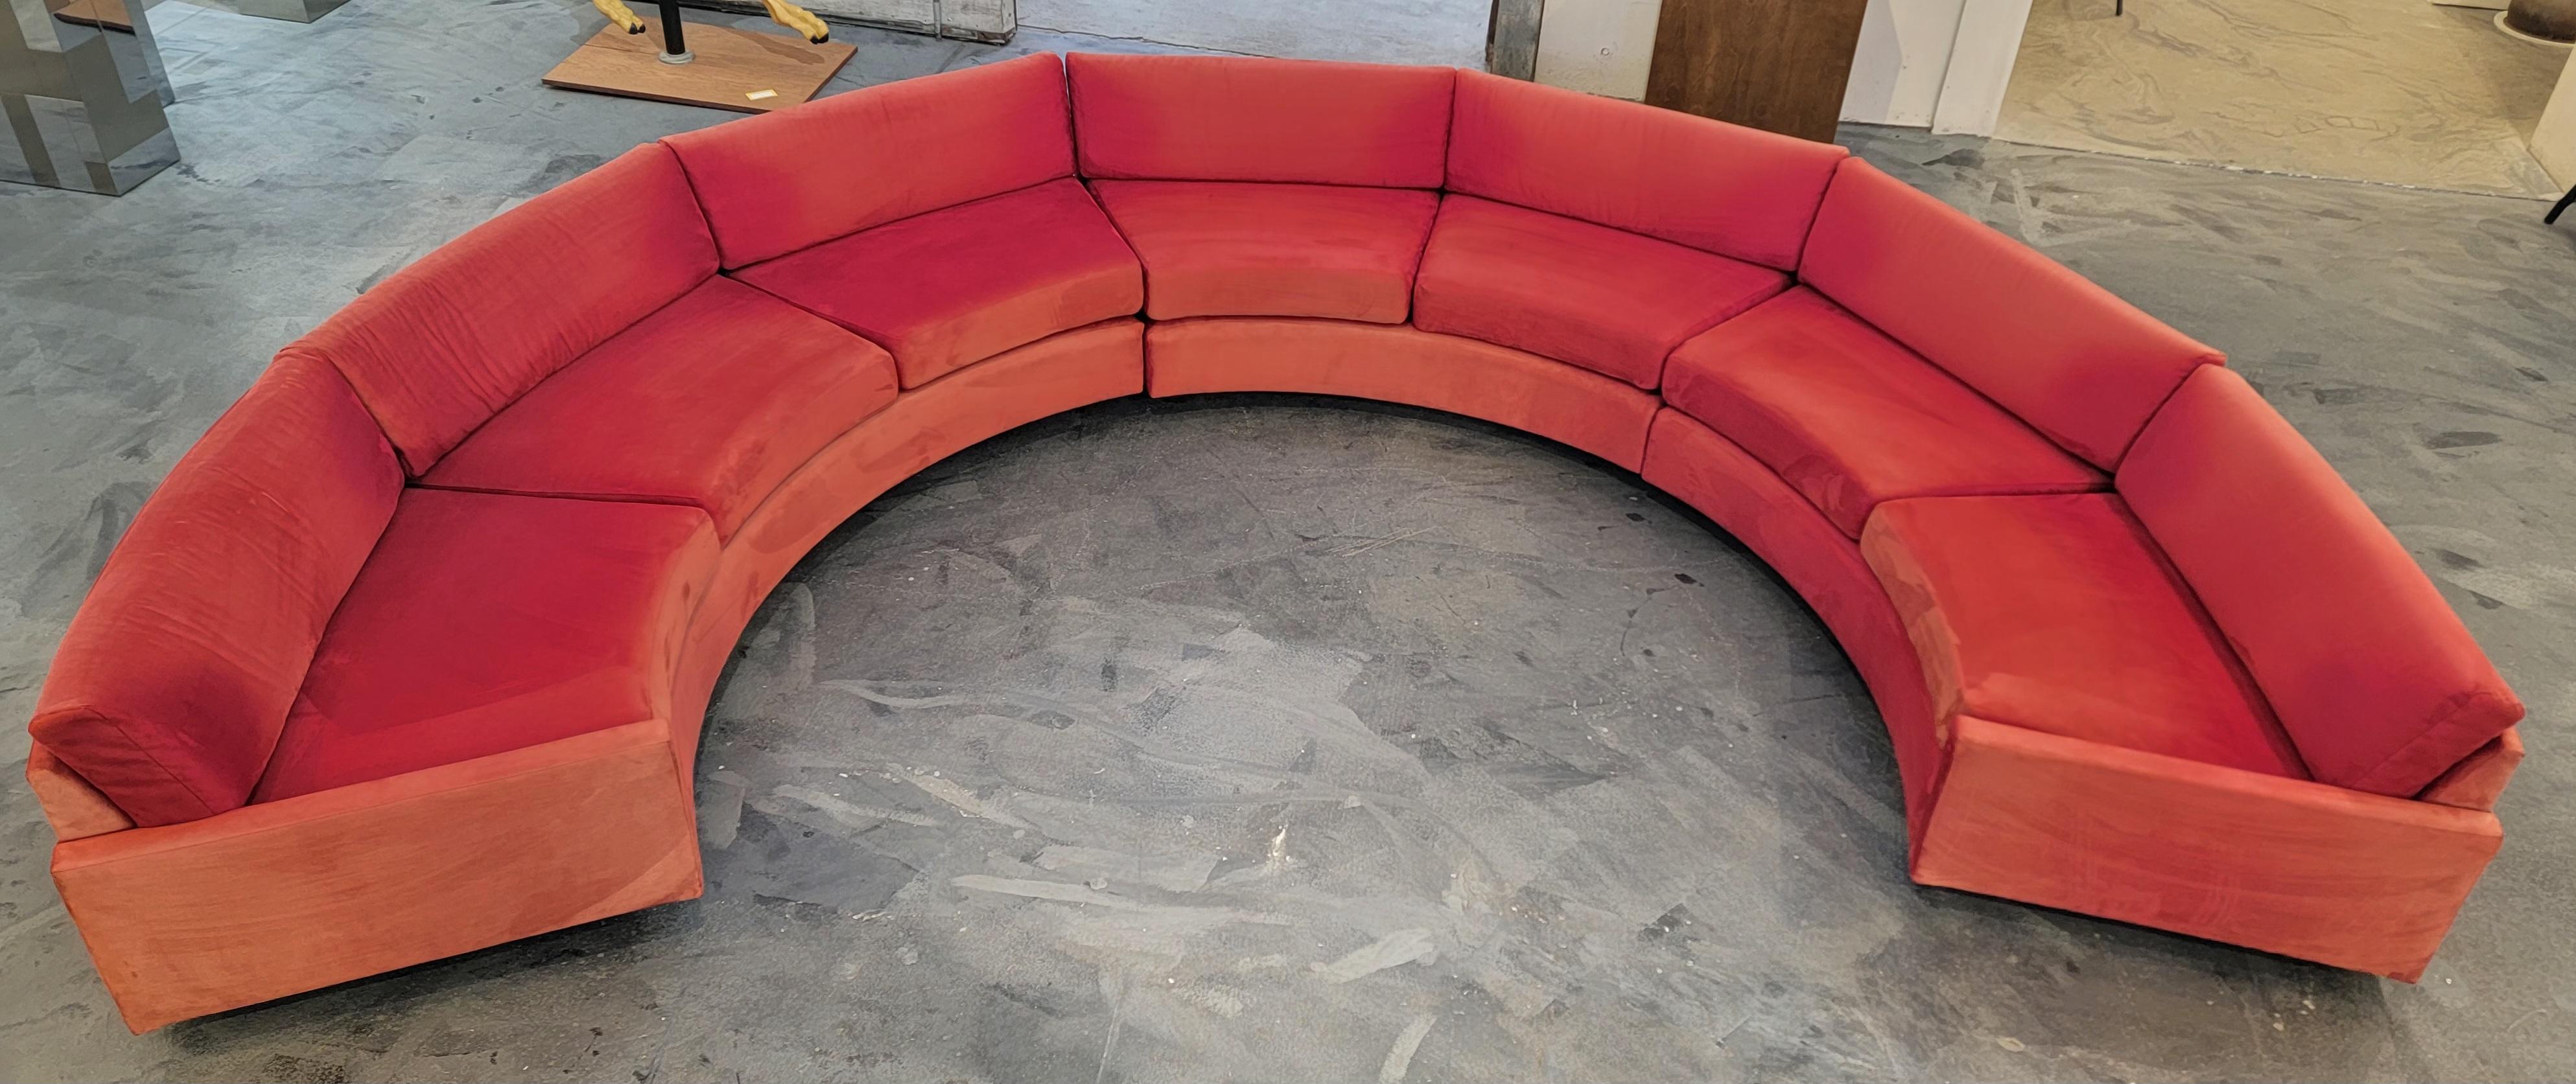 20th Century Milo Baughman Semi-Circular Sectional Sofa 3 Pieces